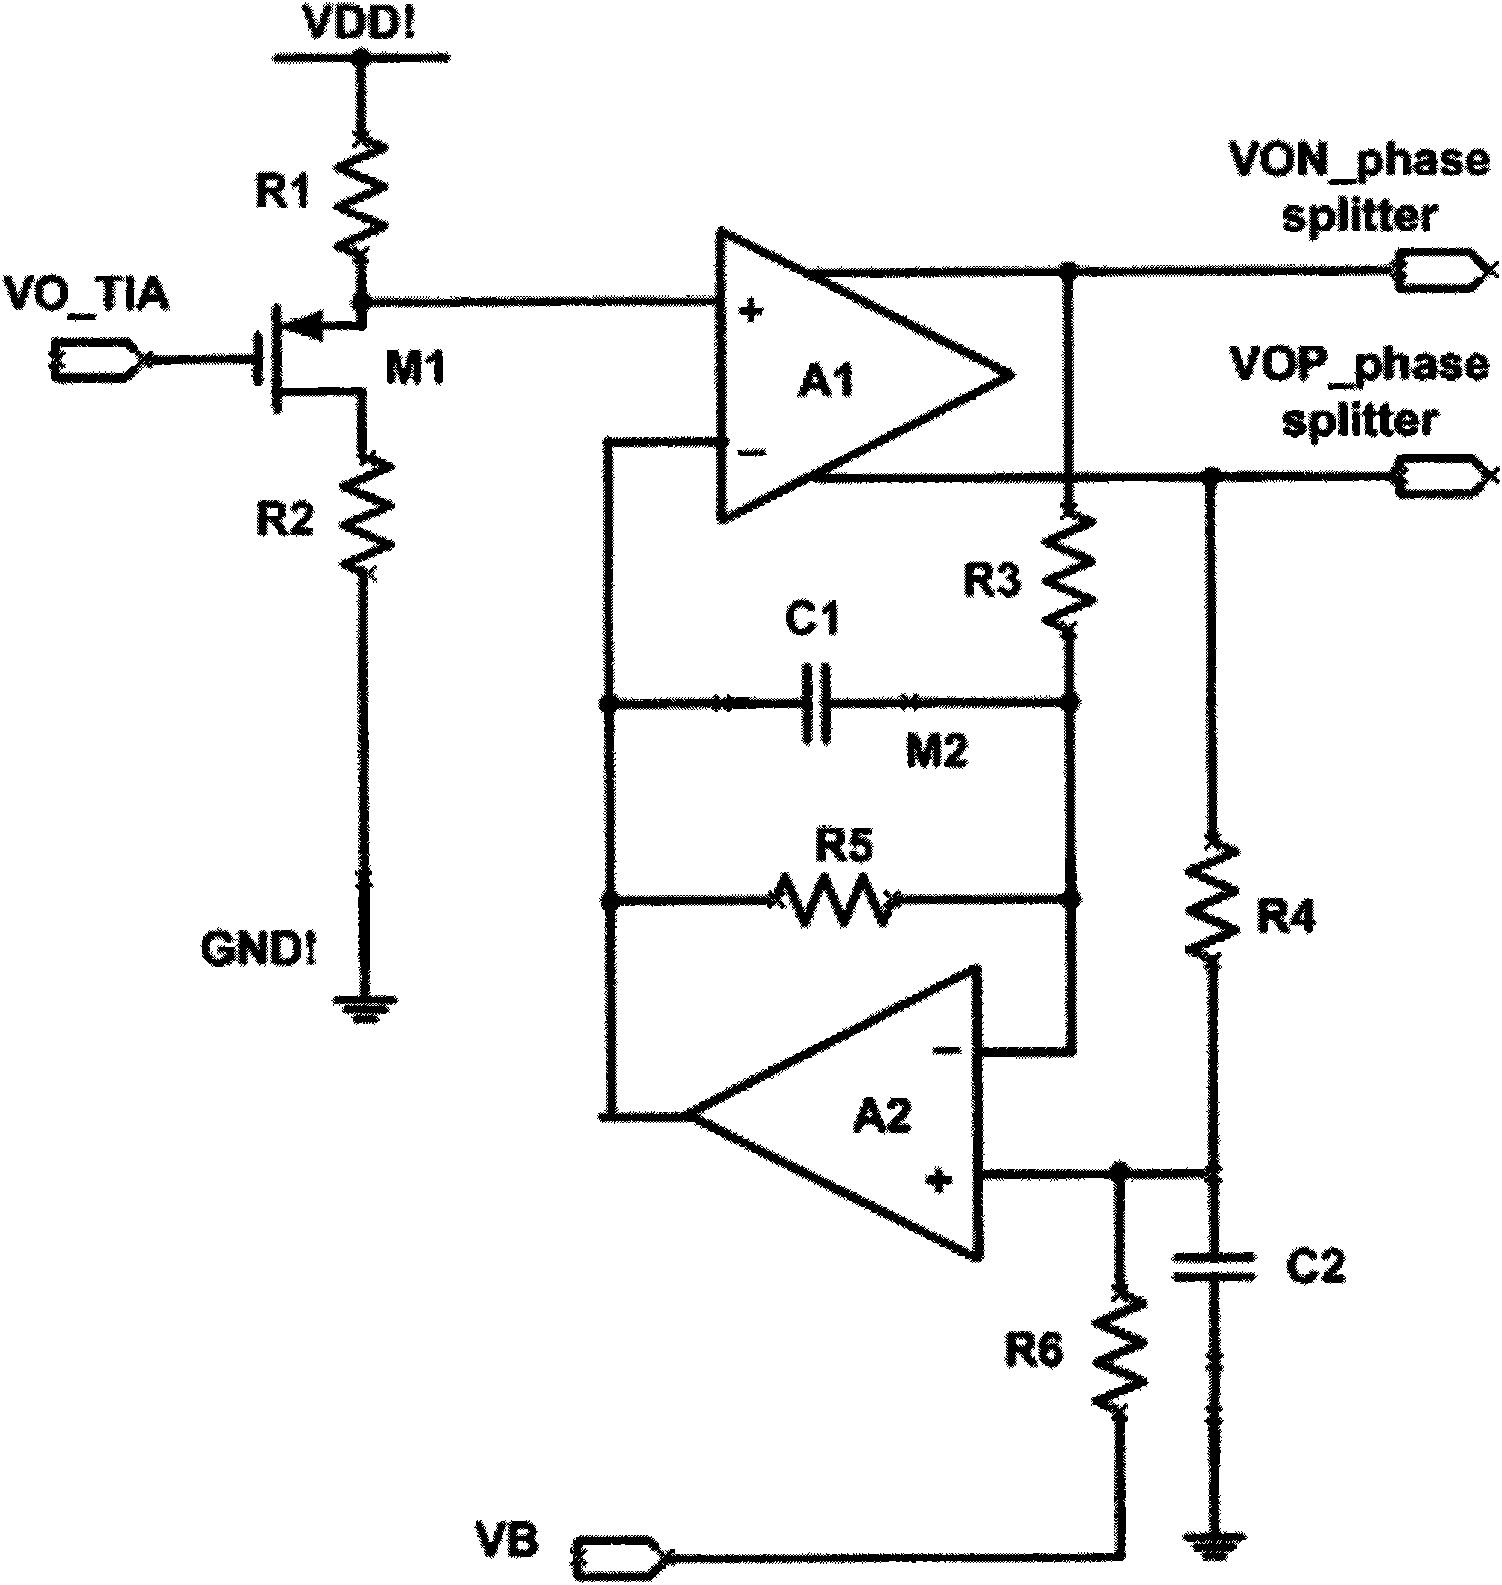 High speed phase splitting circuit